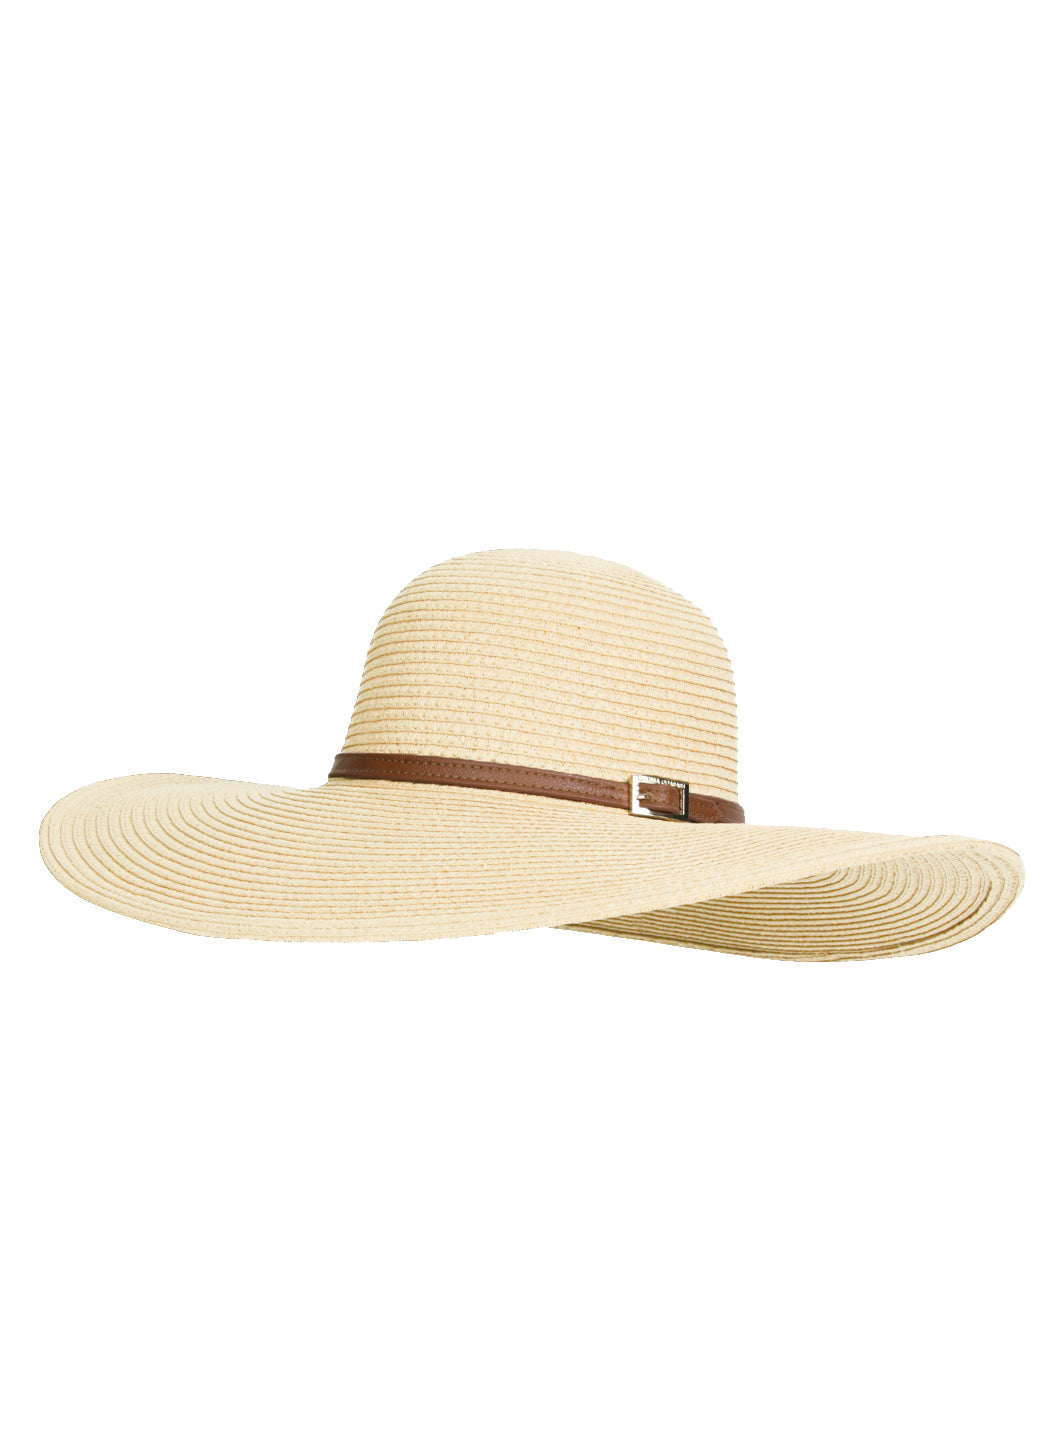 Designer Beach & Sun Hats  Melissa Odabash